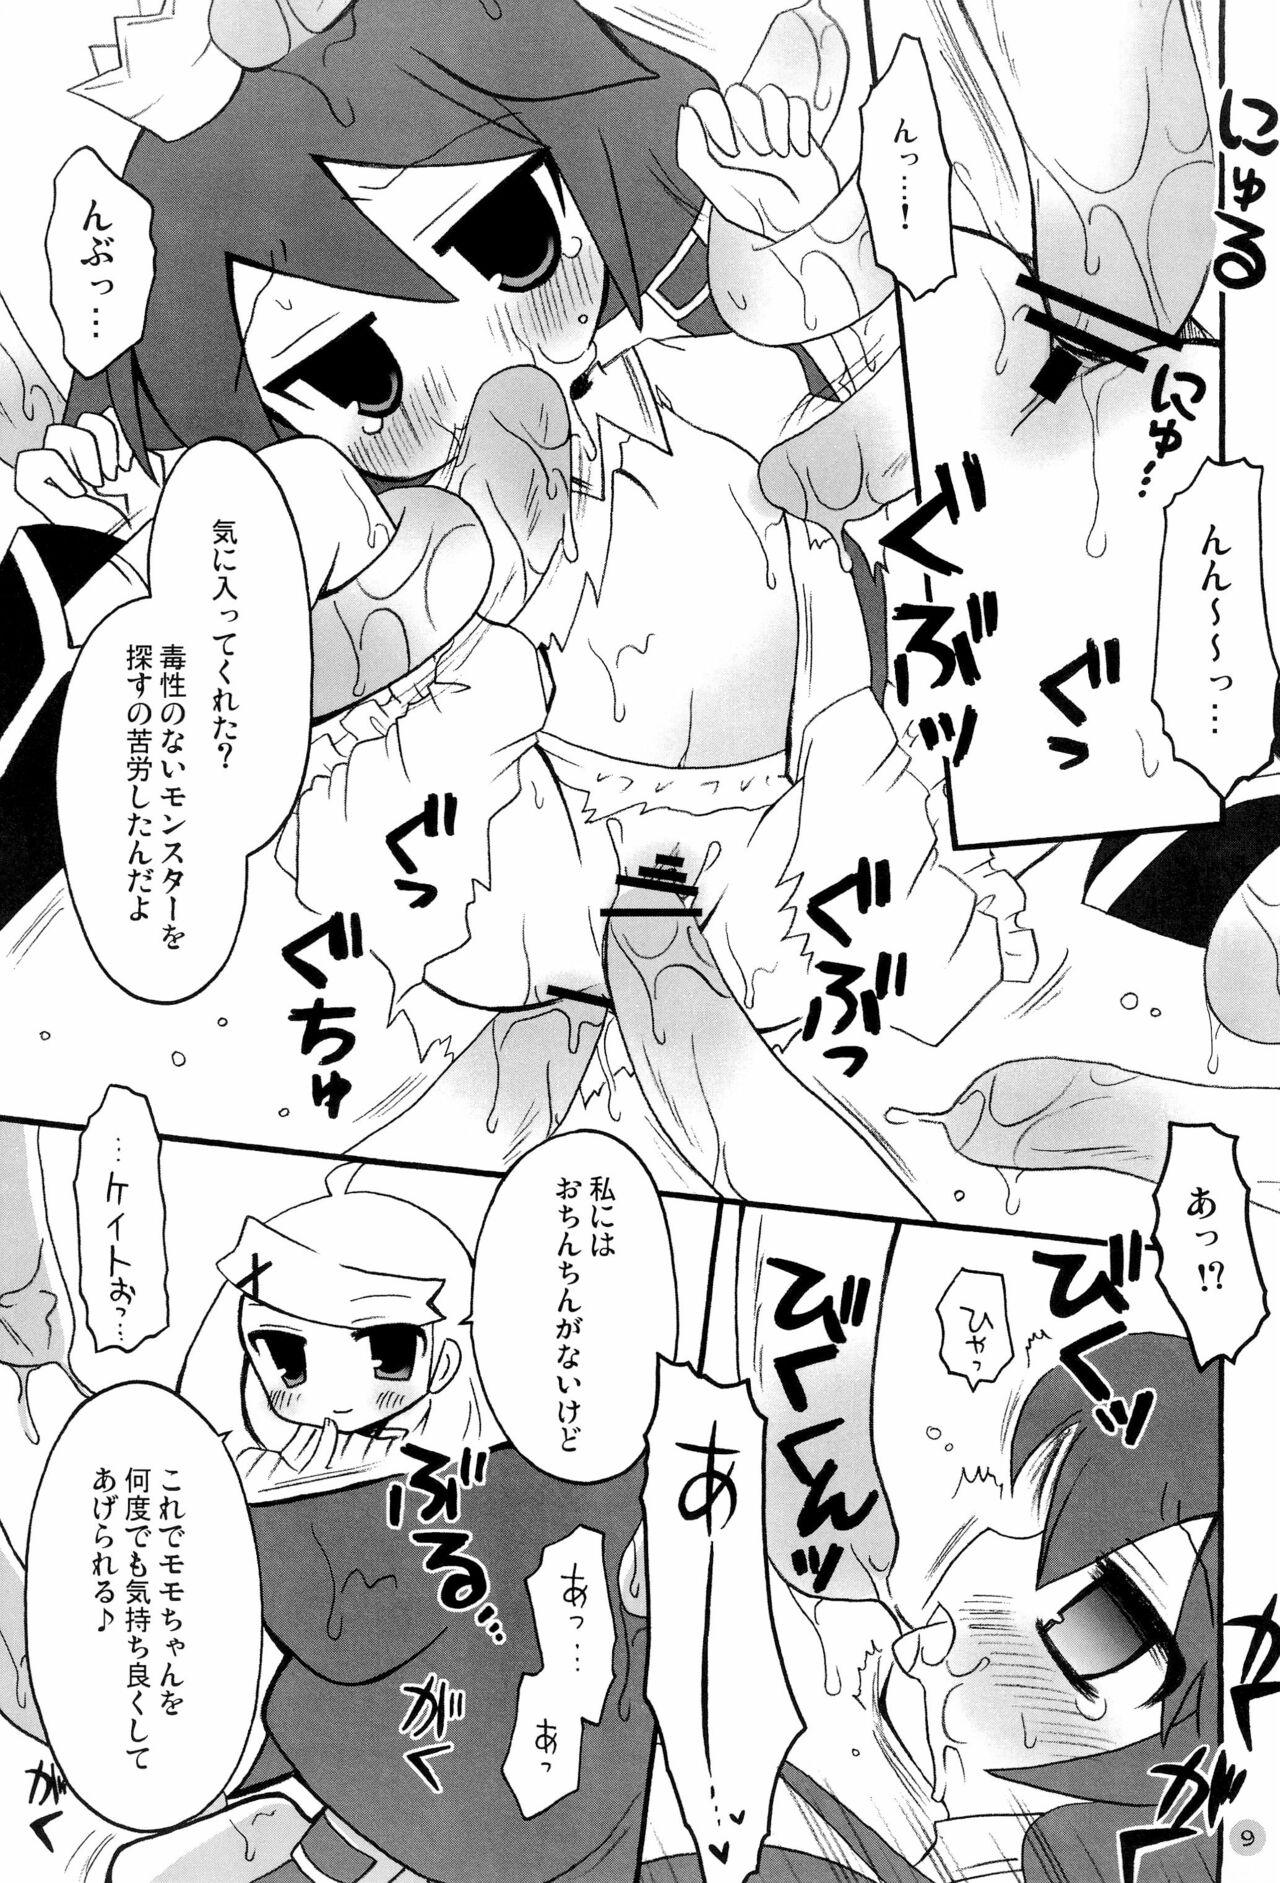 Caliente Harumomo no Tsubomi - 7th dragon Spank - Page 9